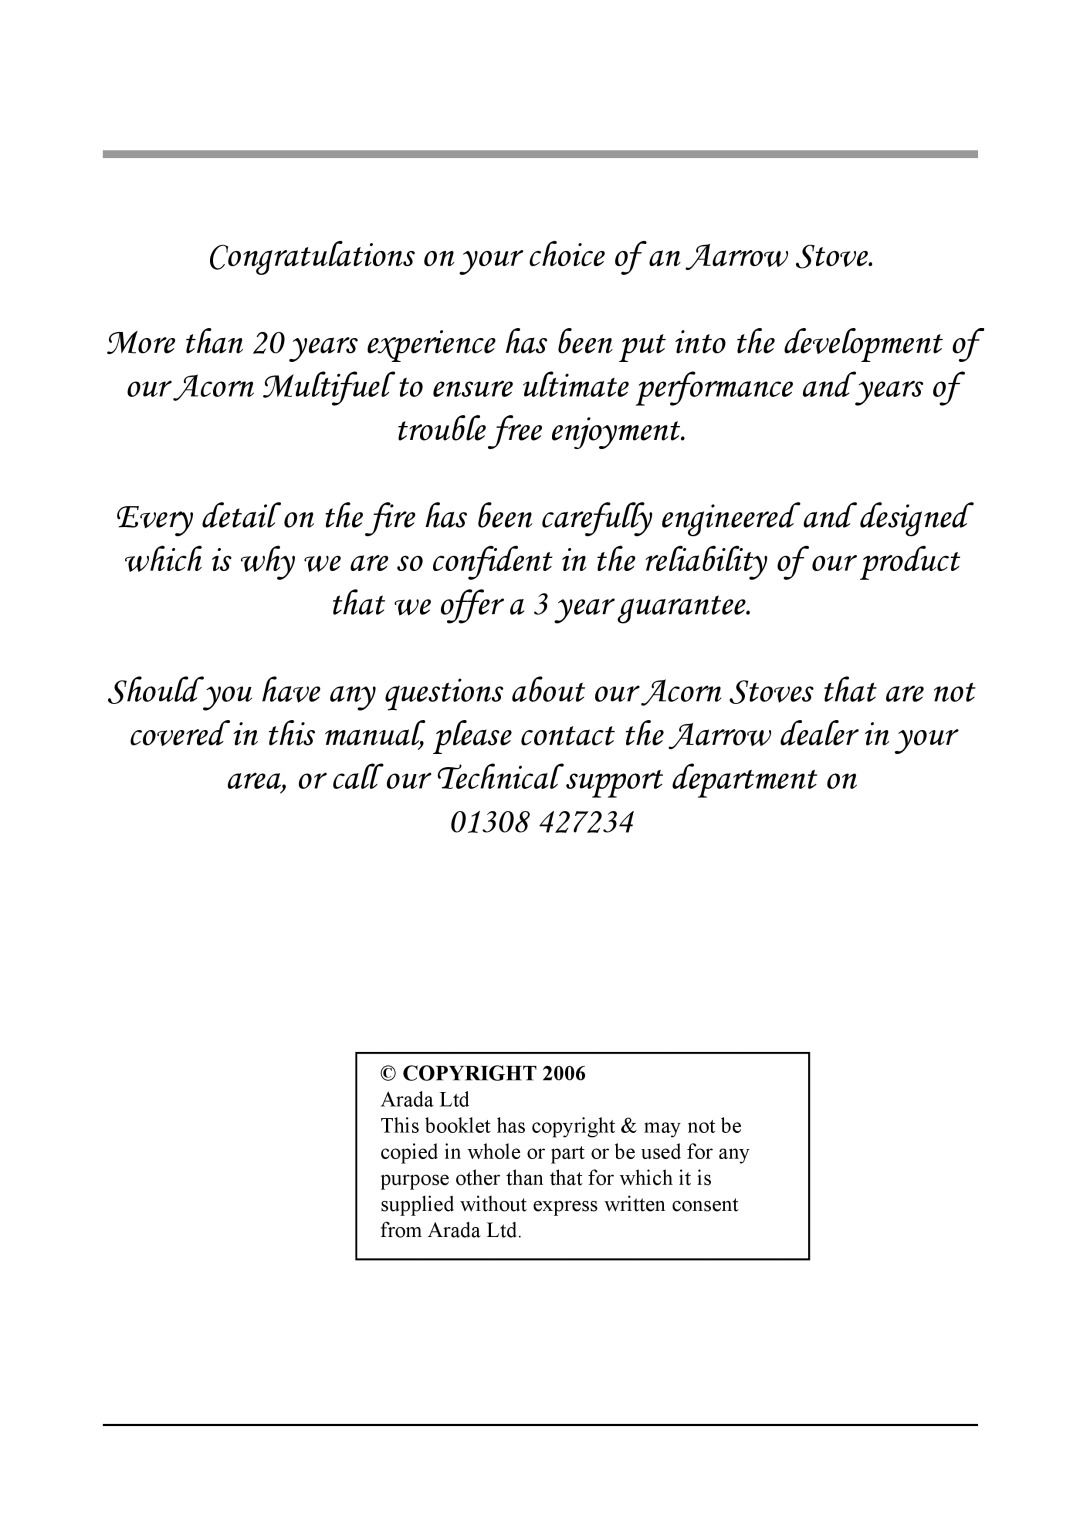 Aarrow Fires Tf 70 installation manual Congratulations on your choice of an Aarrow Stove 